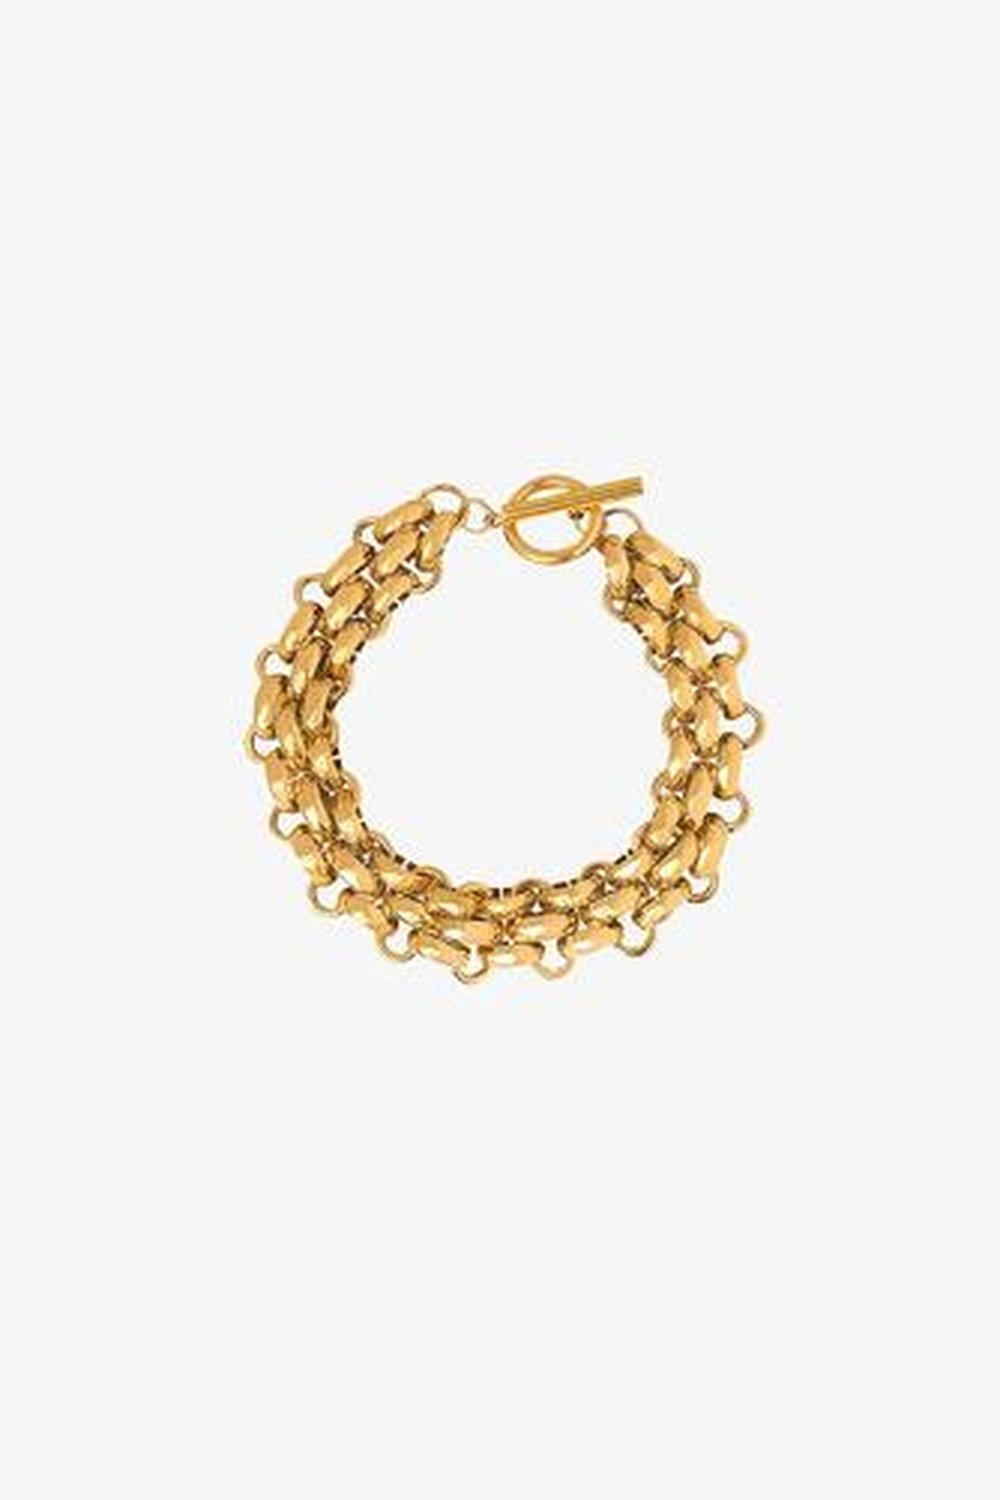 Gold-Plated Toggle Clasp Bracelet - Bracelets - FITGGINS